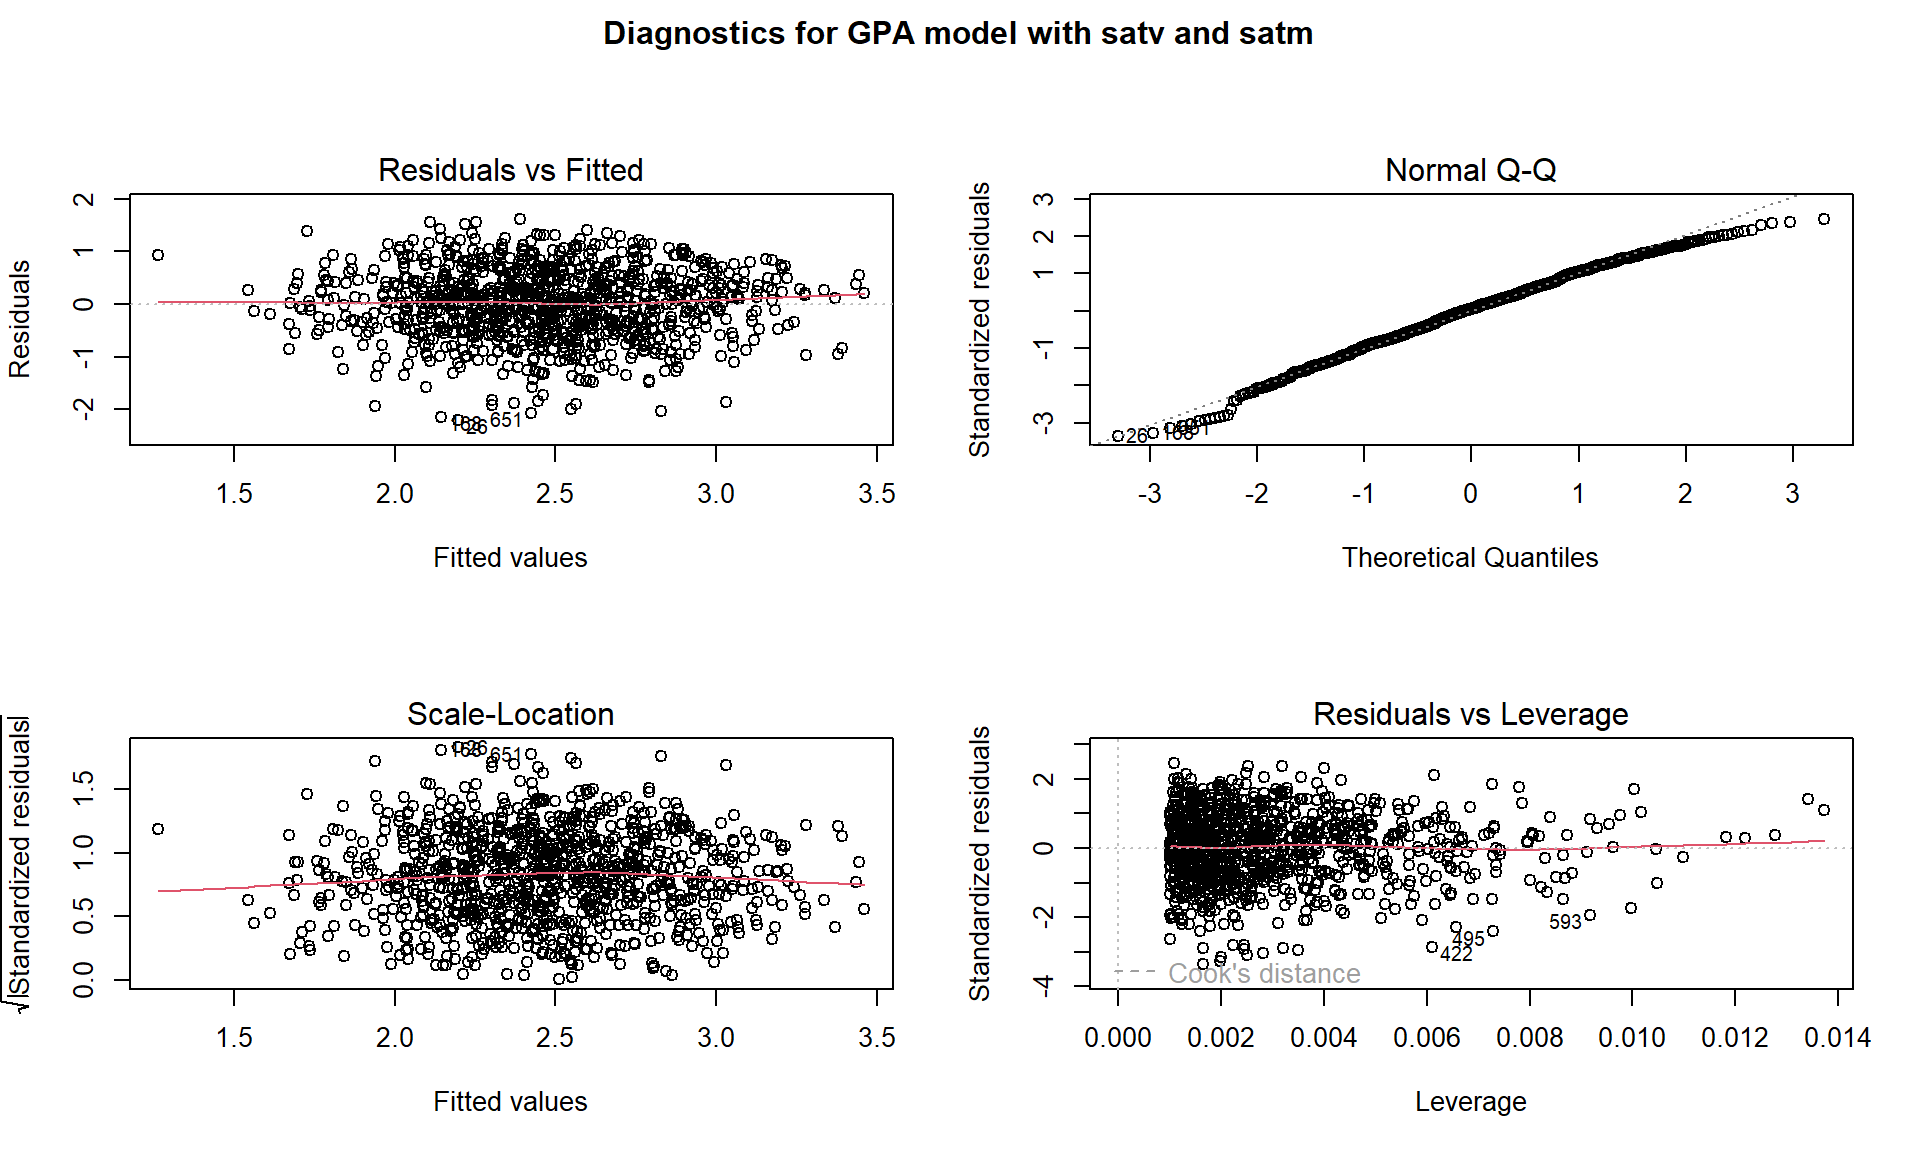 Diagnostic plots for the \(\text{fygpa}\sim\text{satm} + \text{satm}\) model.